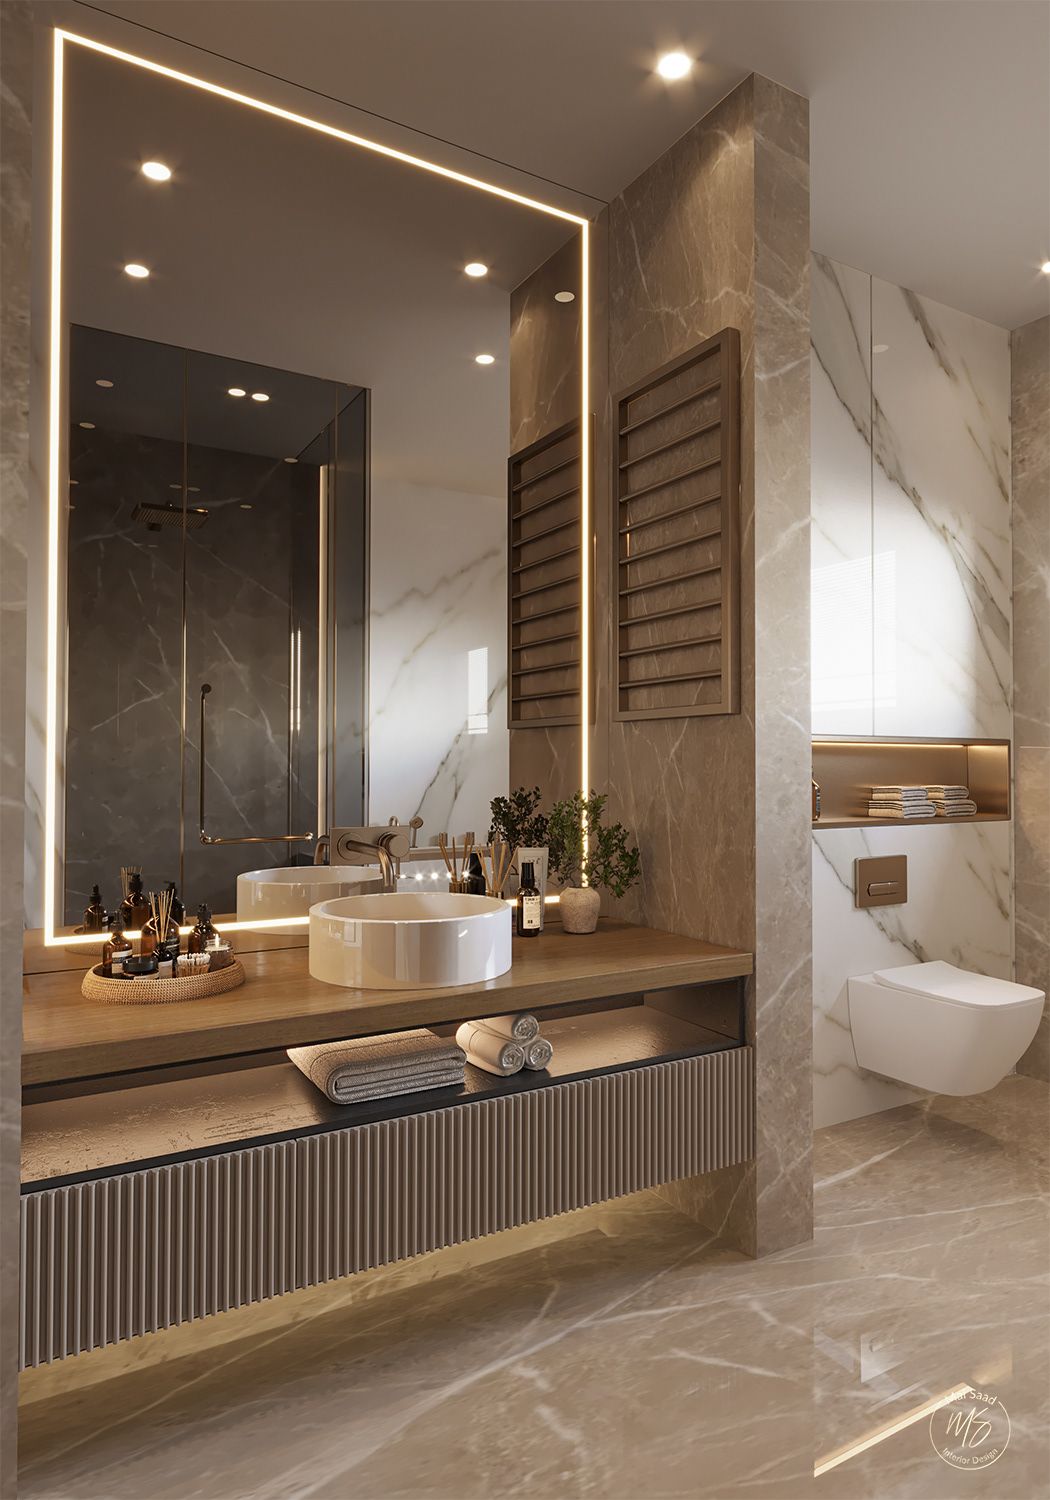 Luxurious Bathroom Design for a Spa-Like Experience